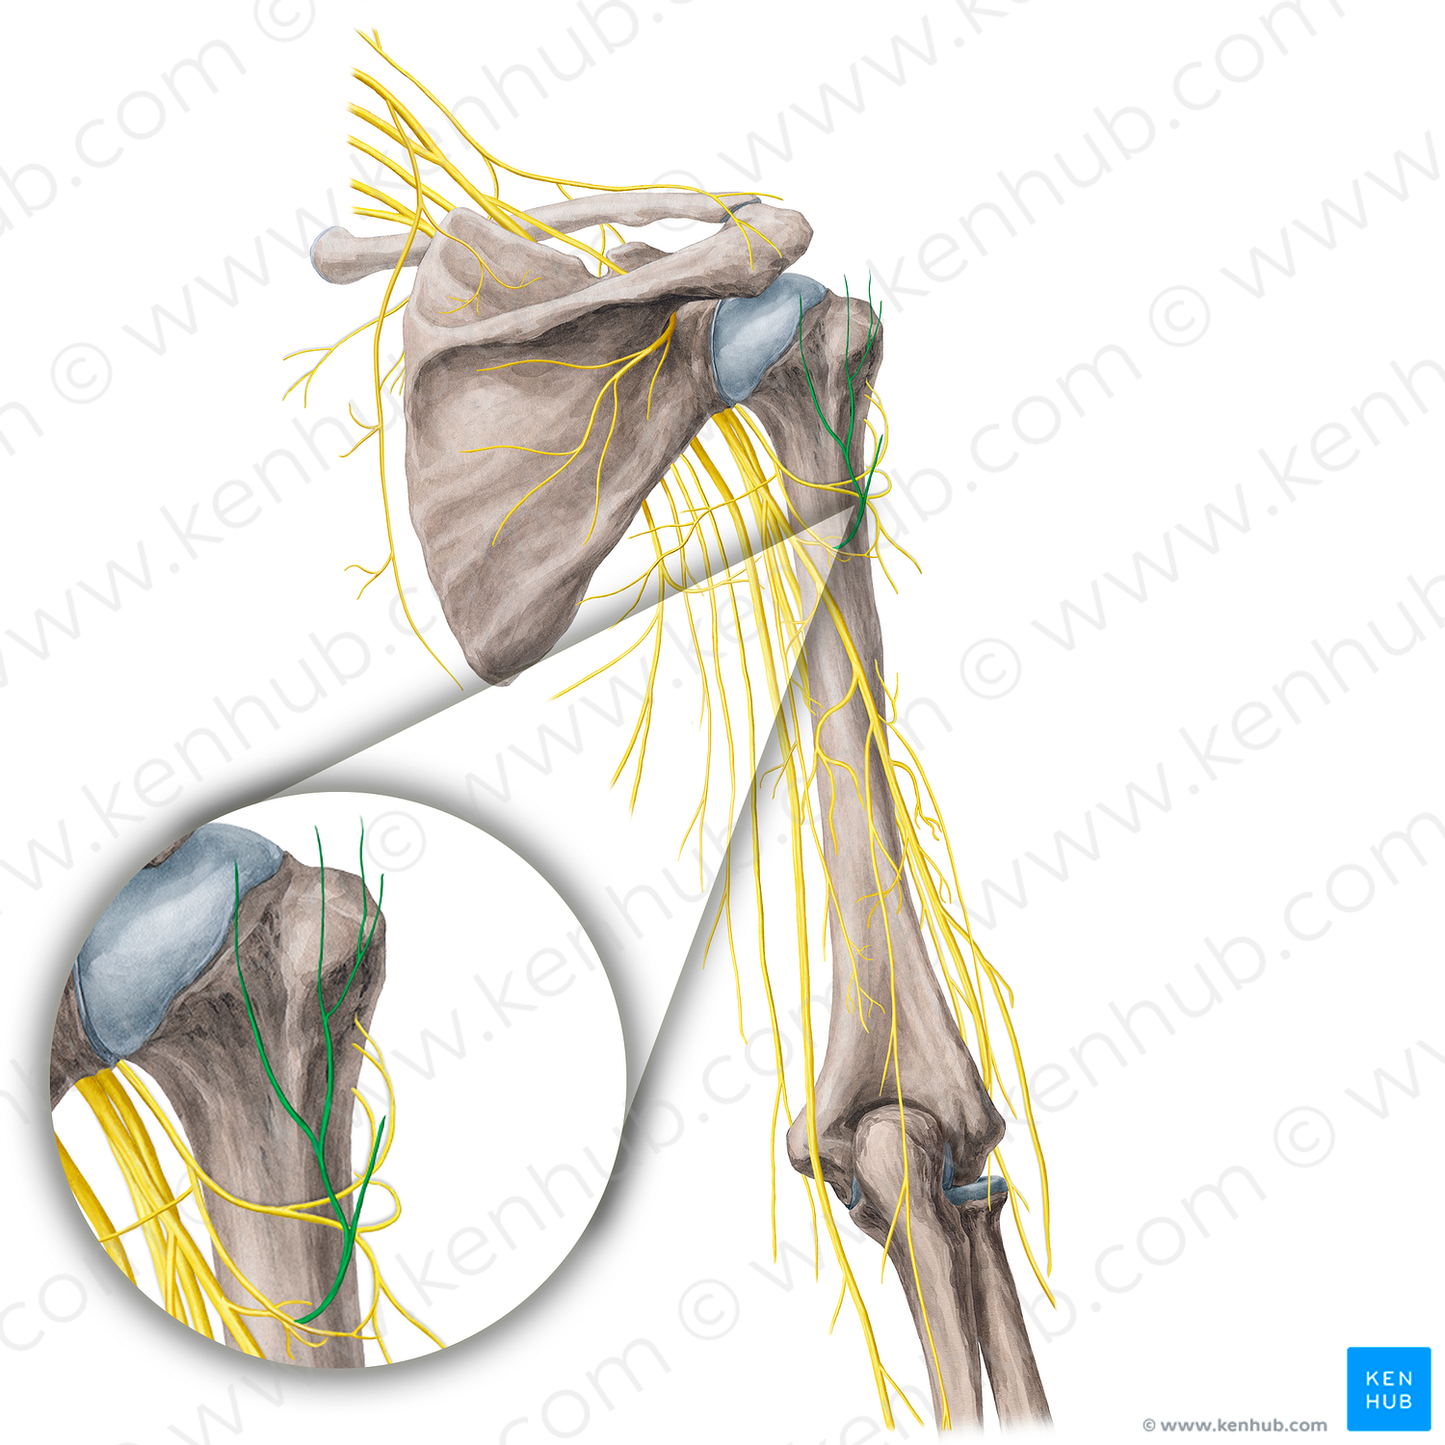 Superior lateral brachial cutaneous nerve (#21756)